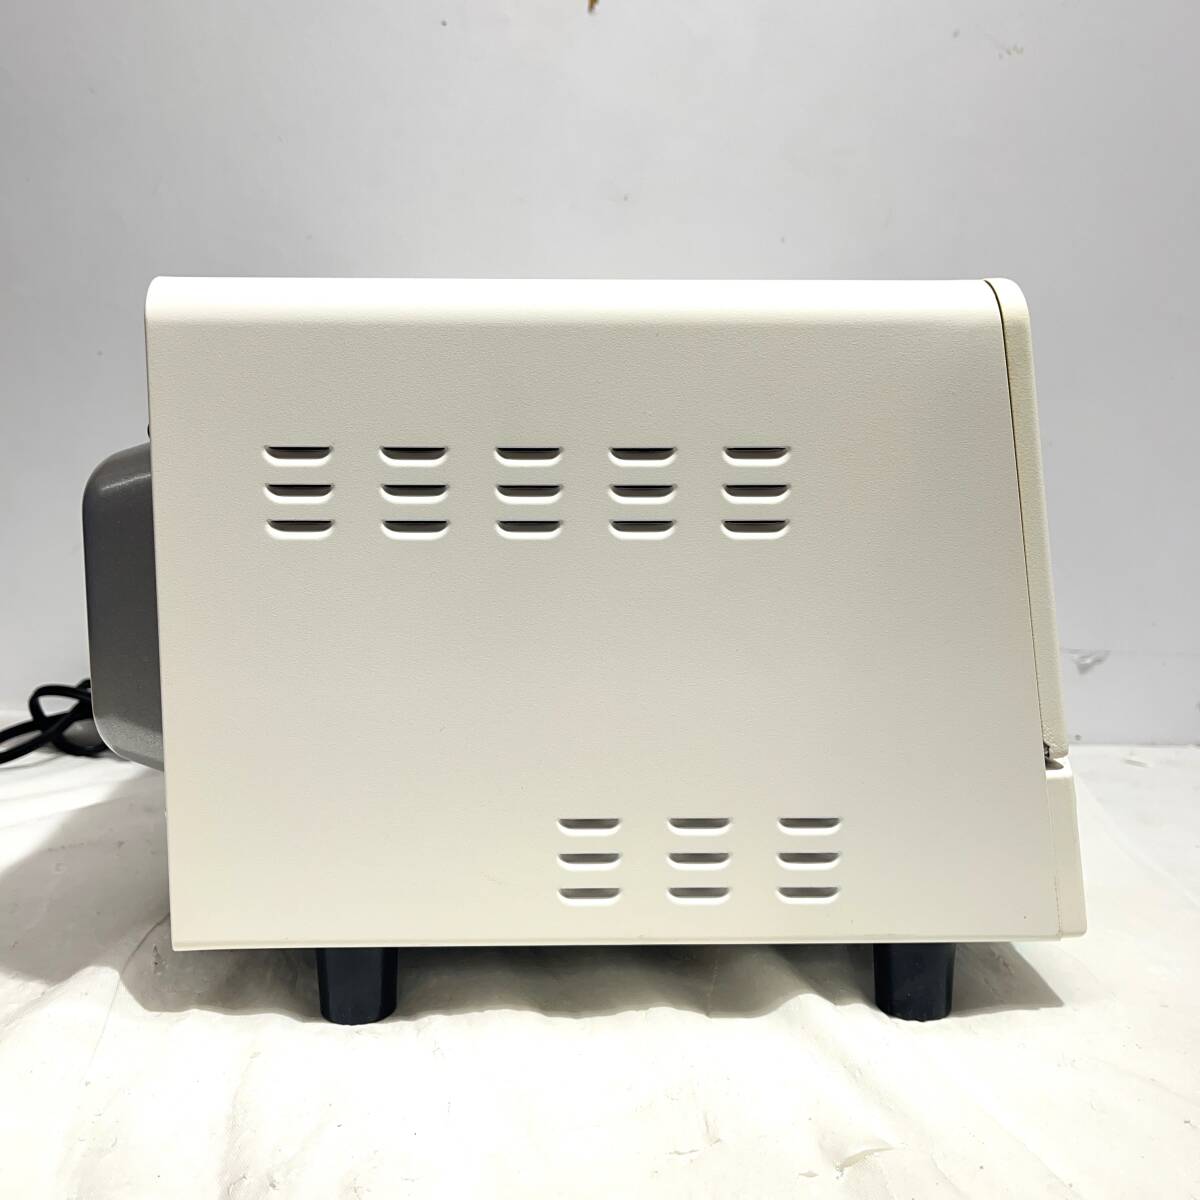 (. tree )[ beautiful goods operation goods ]Panasonic/ Panasonic oven toaster NT-T501 2023 year made white cookware 1200W 600W saucer (o)